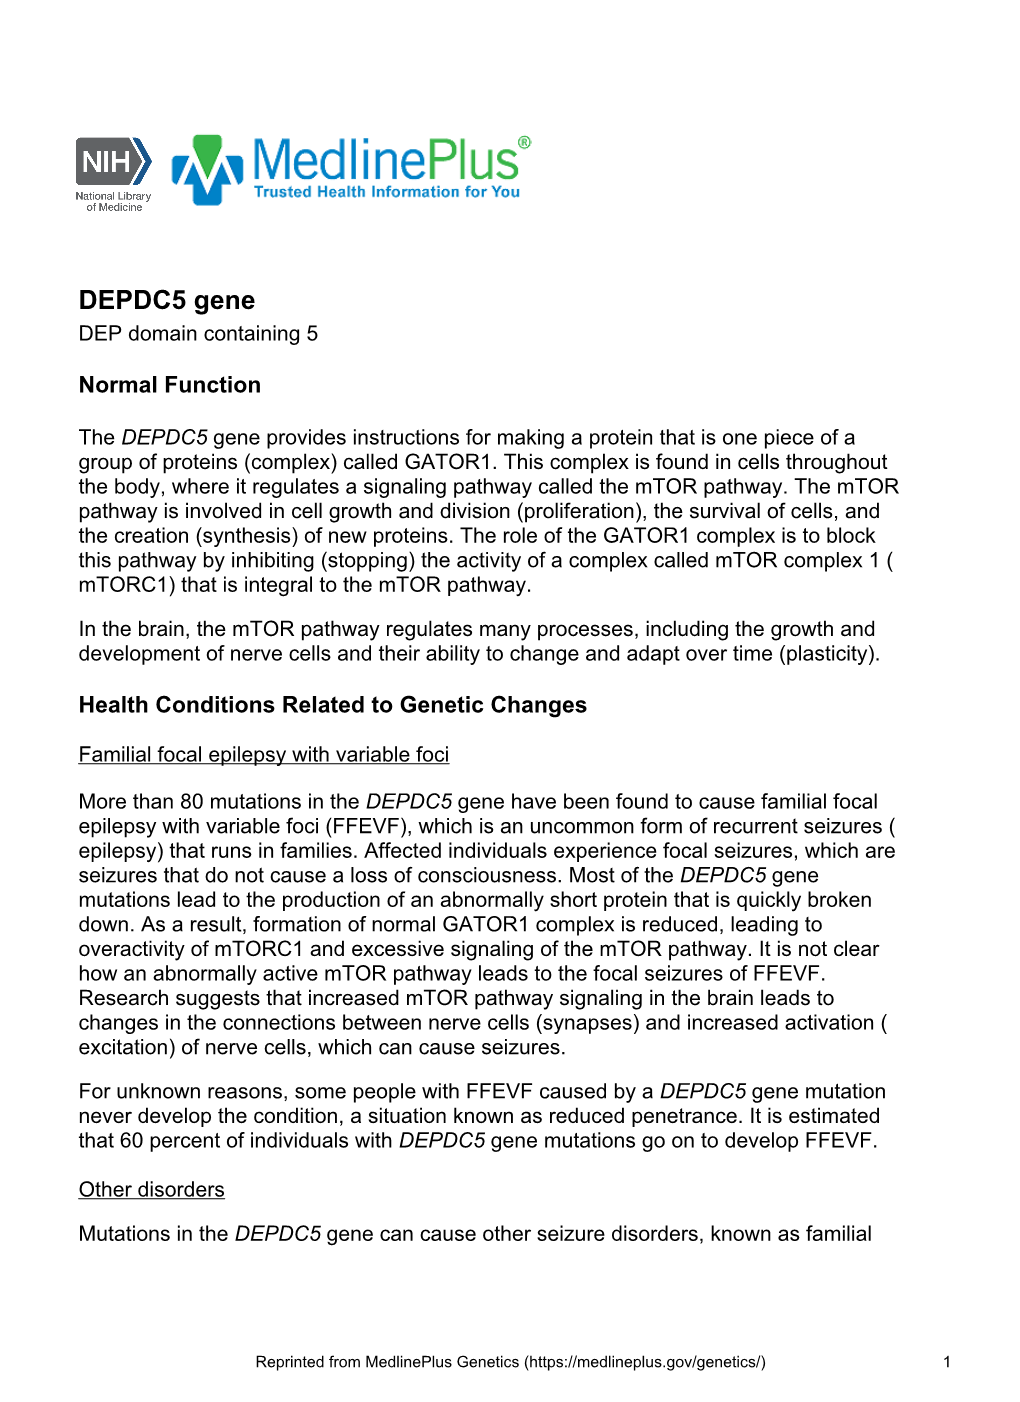 DEPDC5 Gene DEP Domain Containing 5